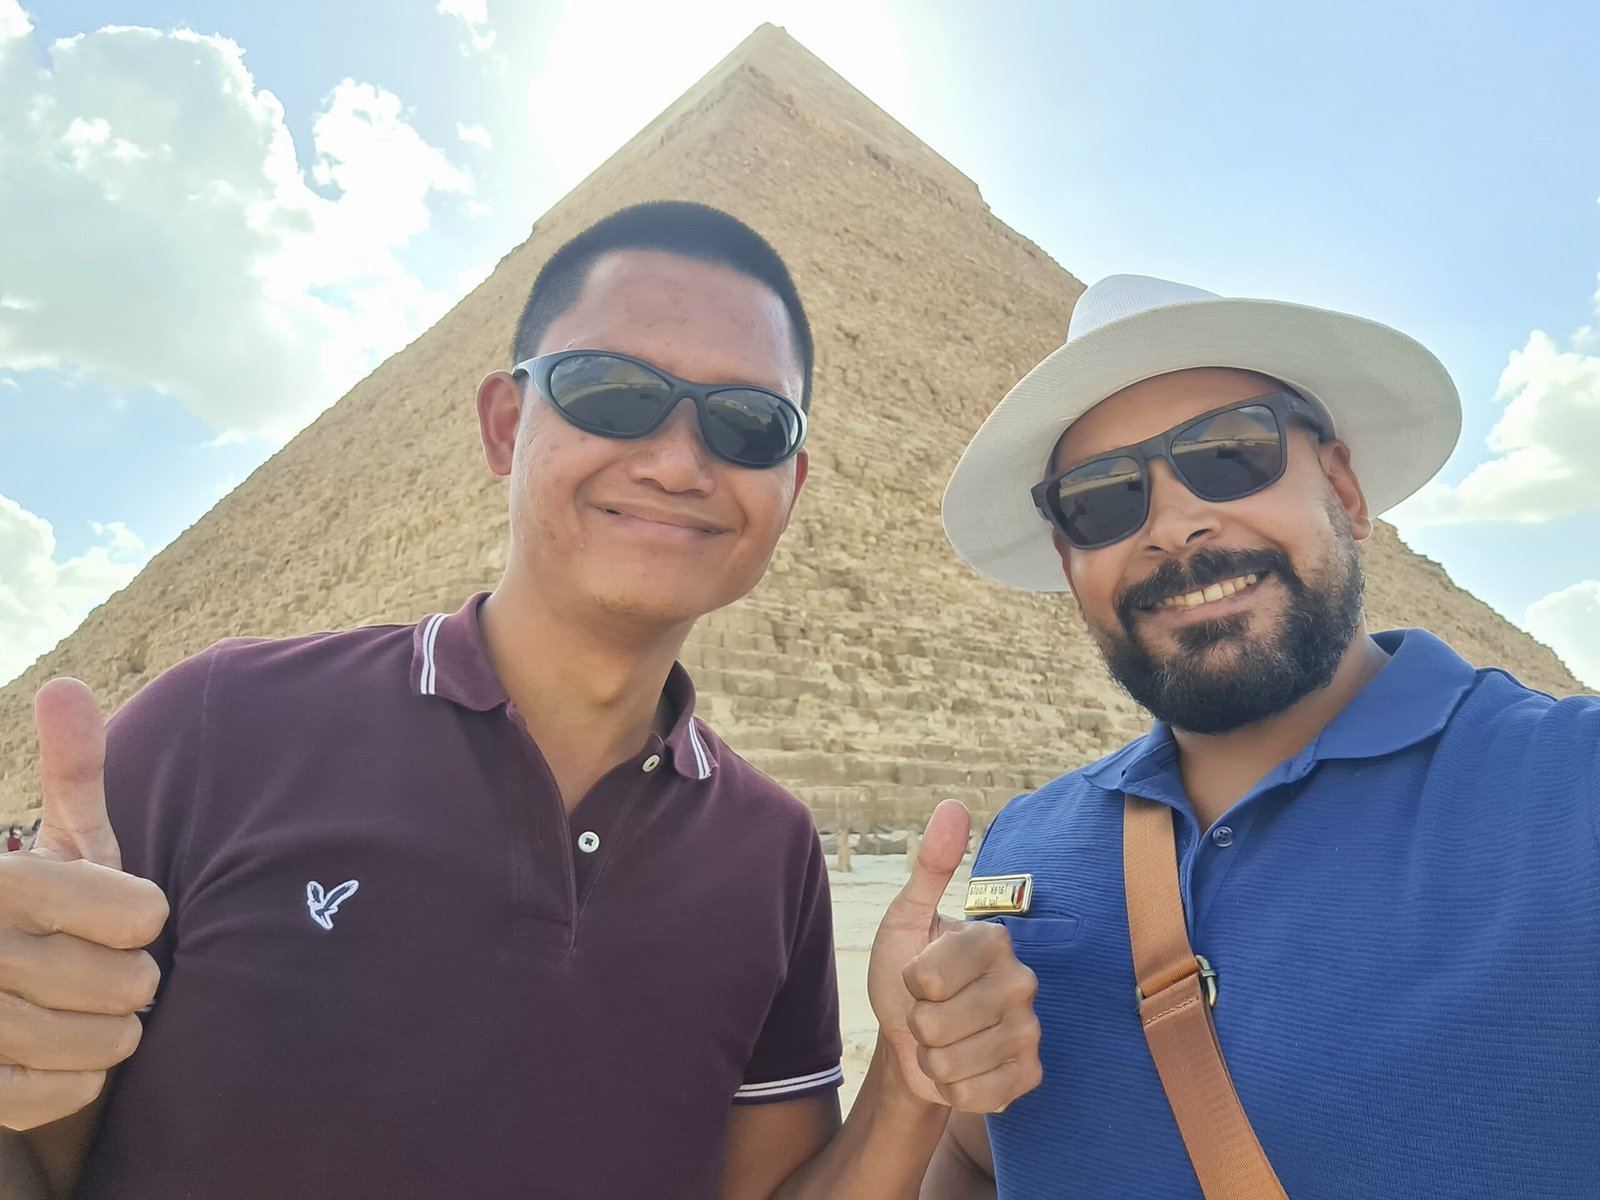 Giza Pyramids tour